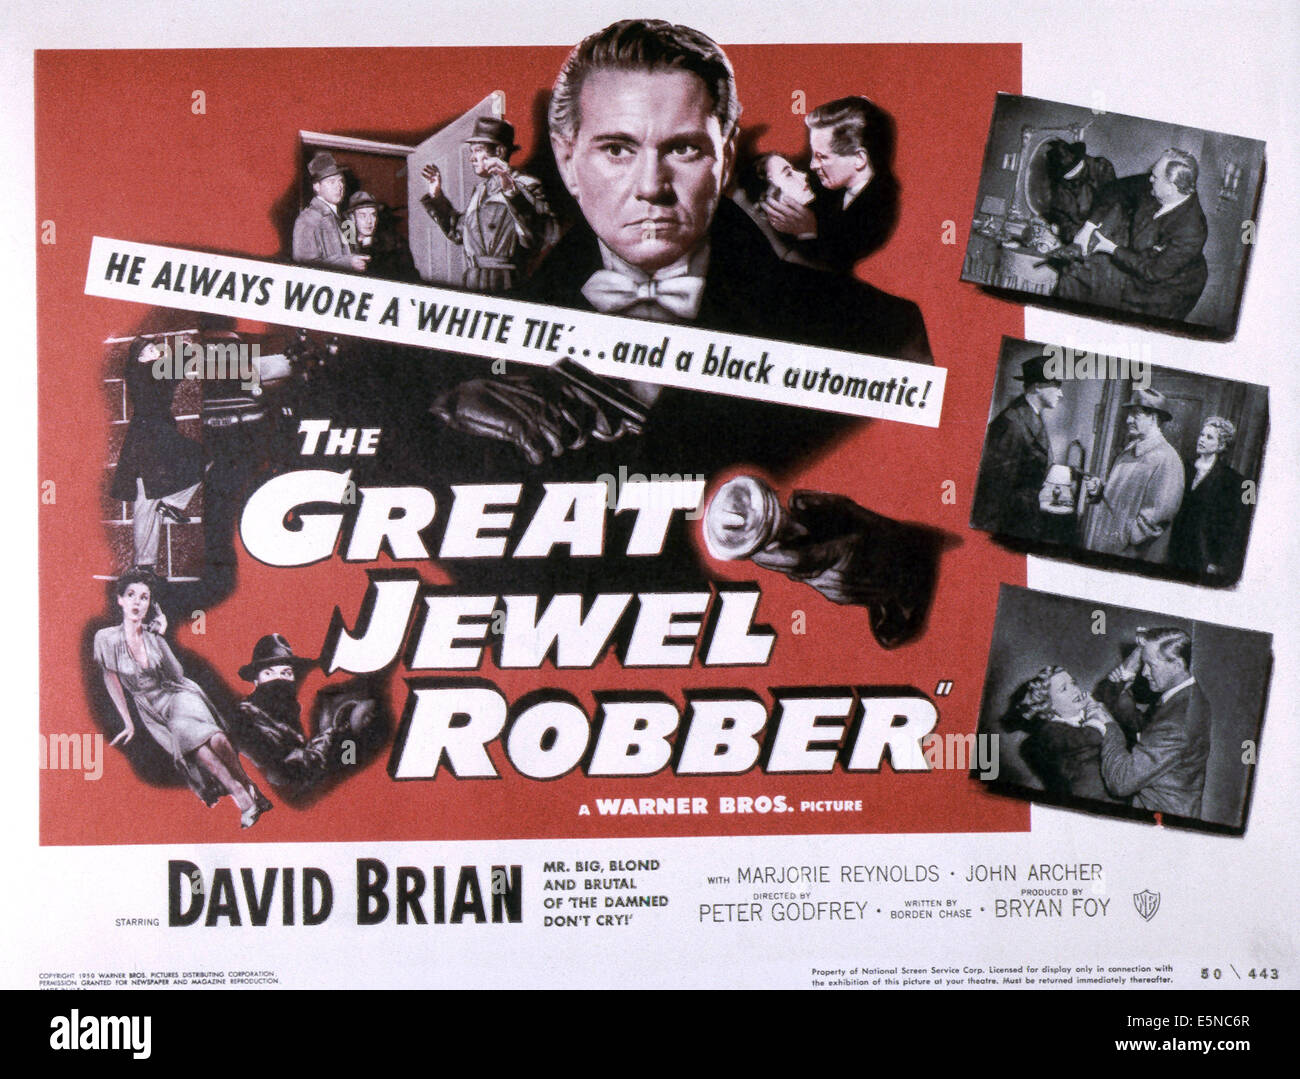 THE GREAT JEWEL ROBBER, David Brian (bowtie), 1950 Stock Photo